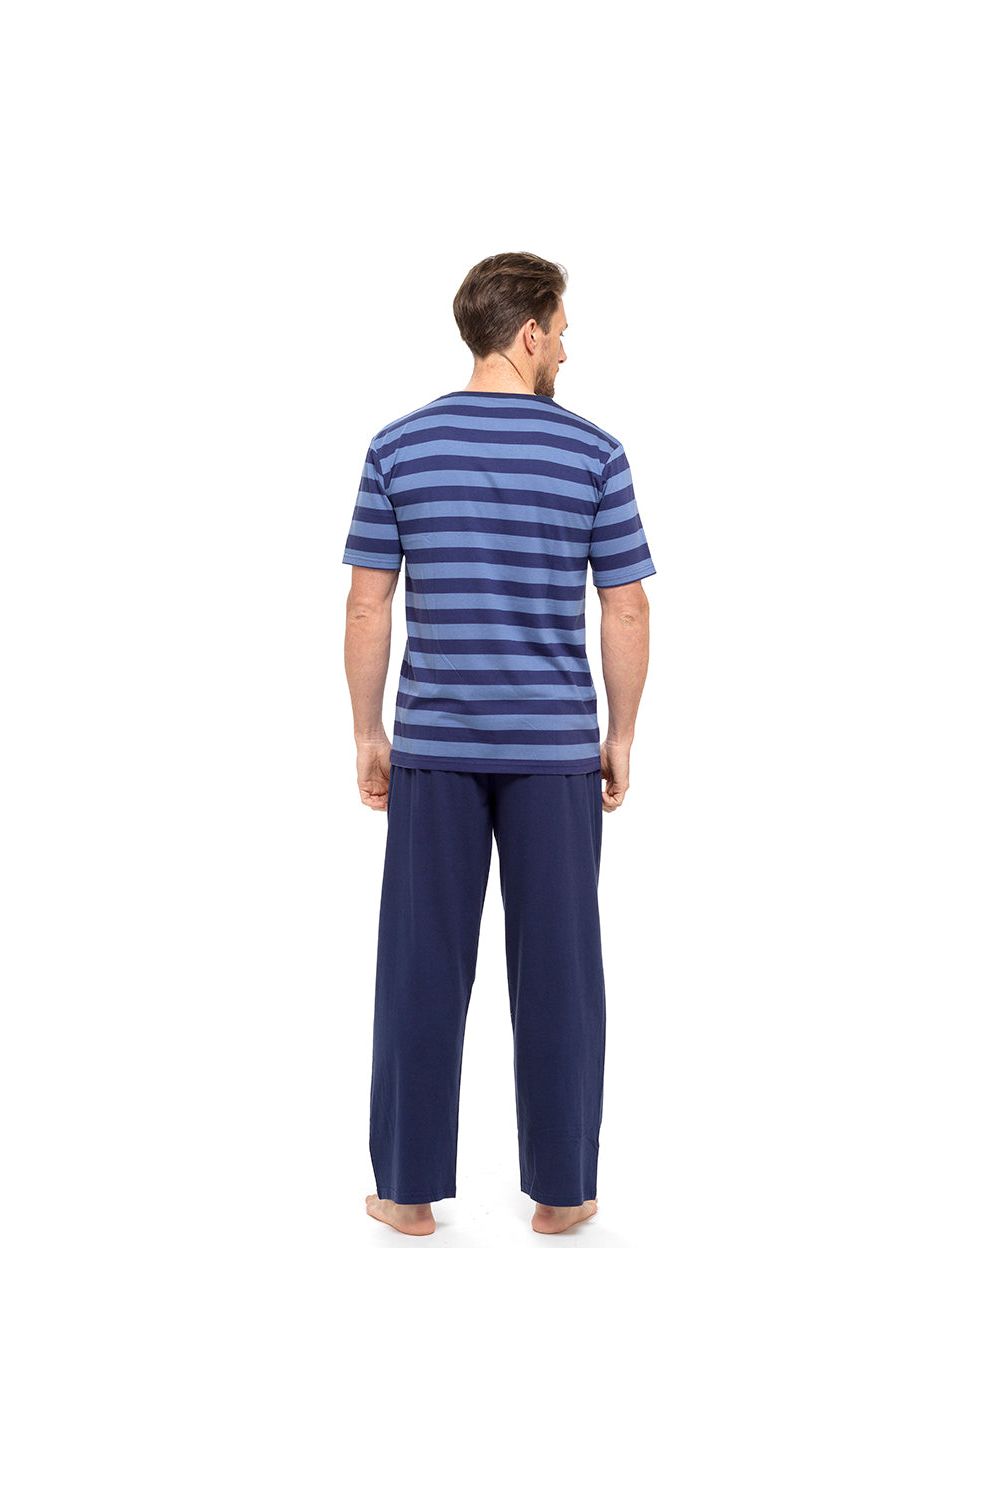 Tom Franks Mens Pyjama Set Short Sleeve Navy Striped Top - Pyjamas.com